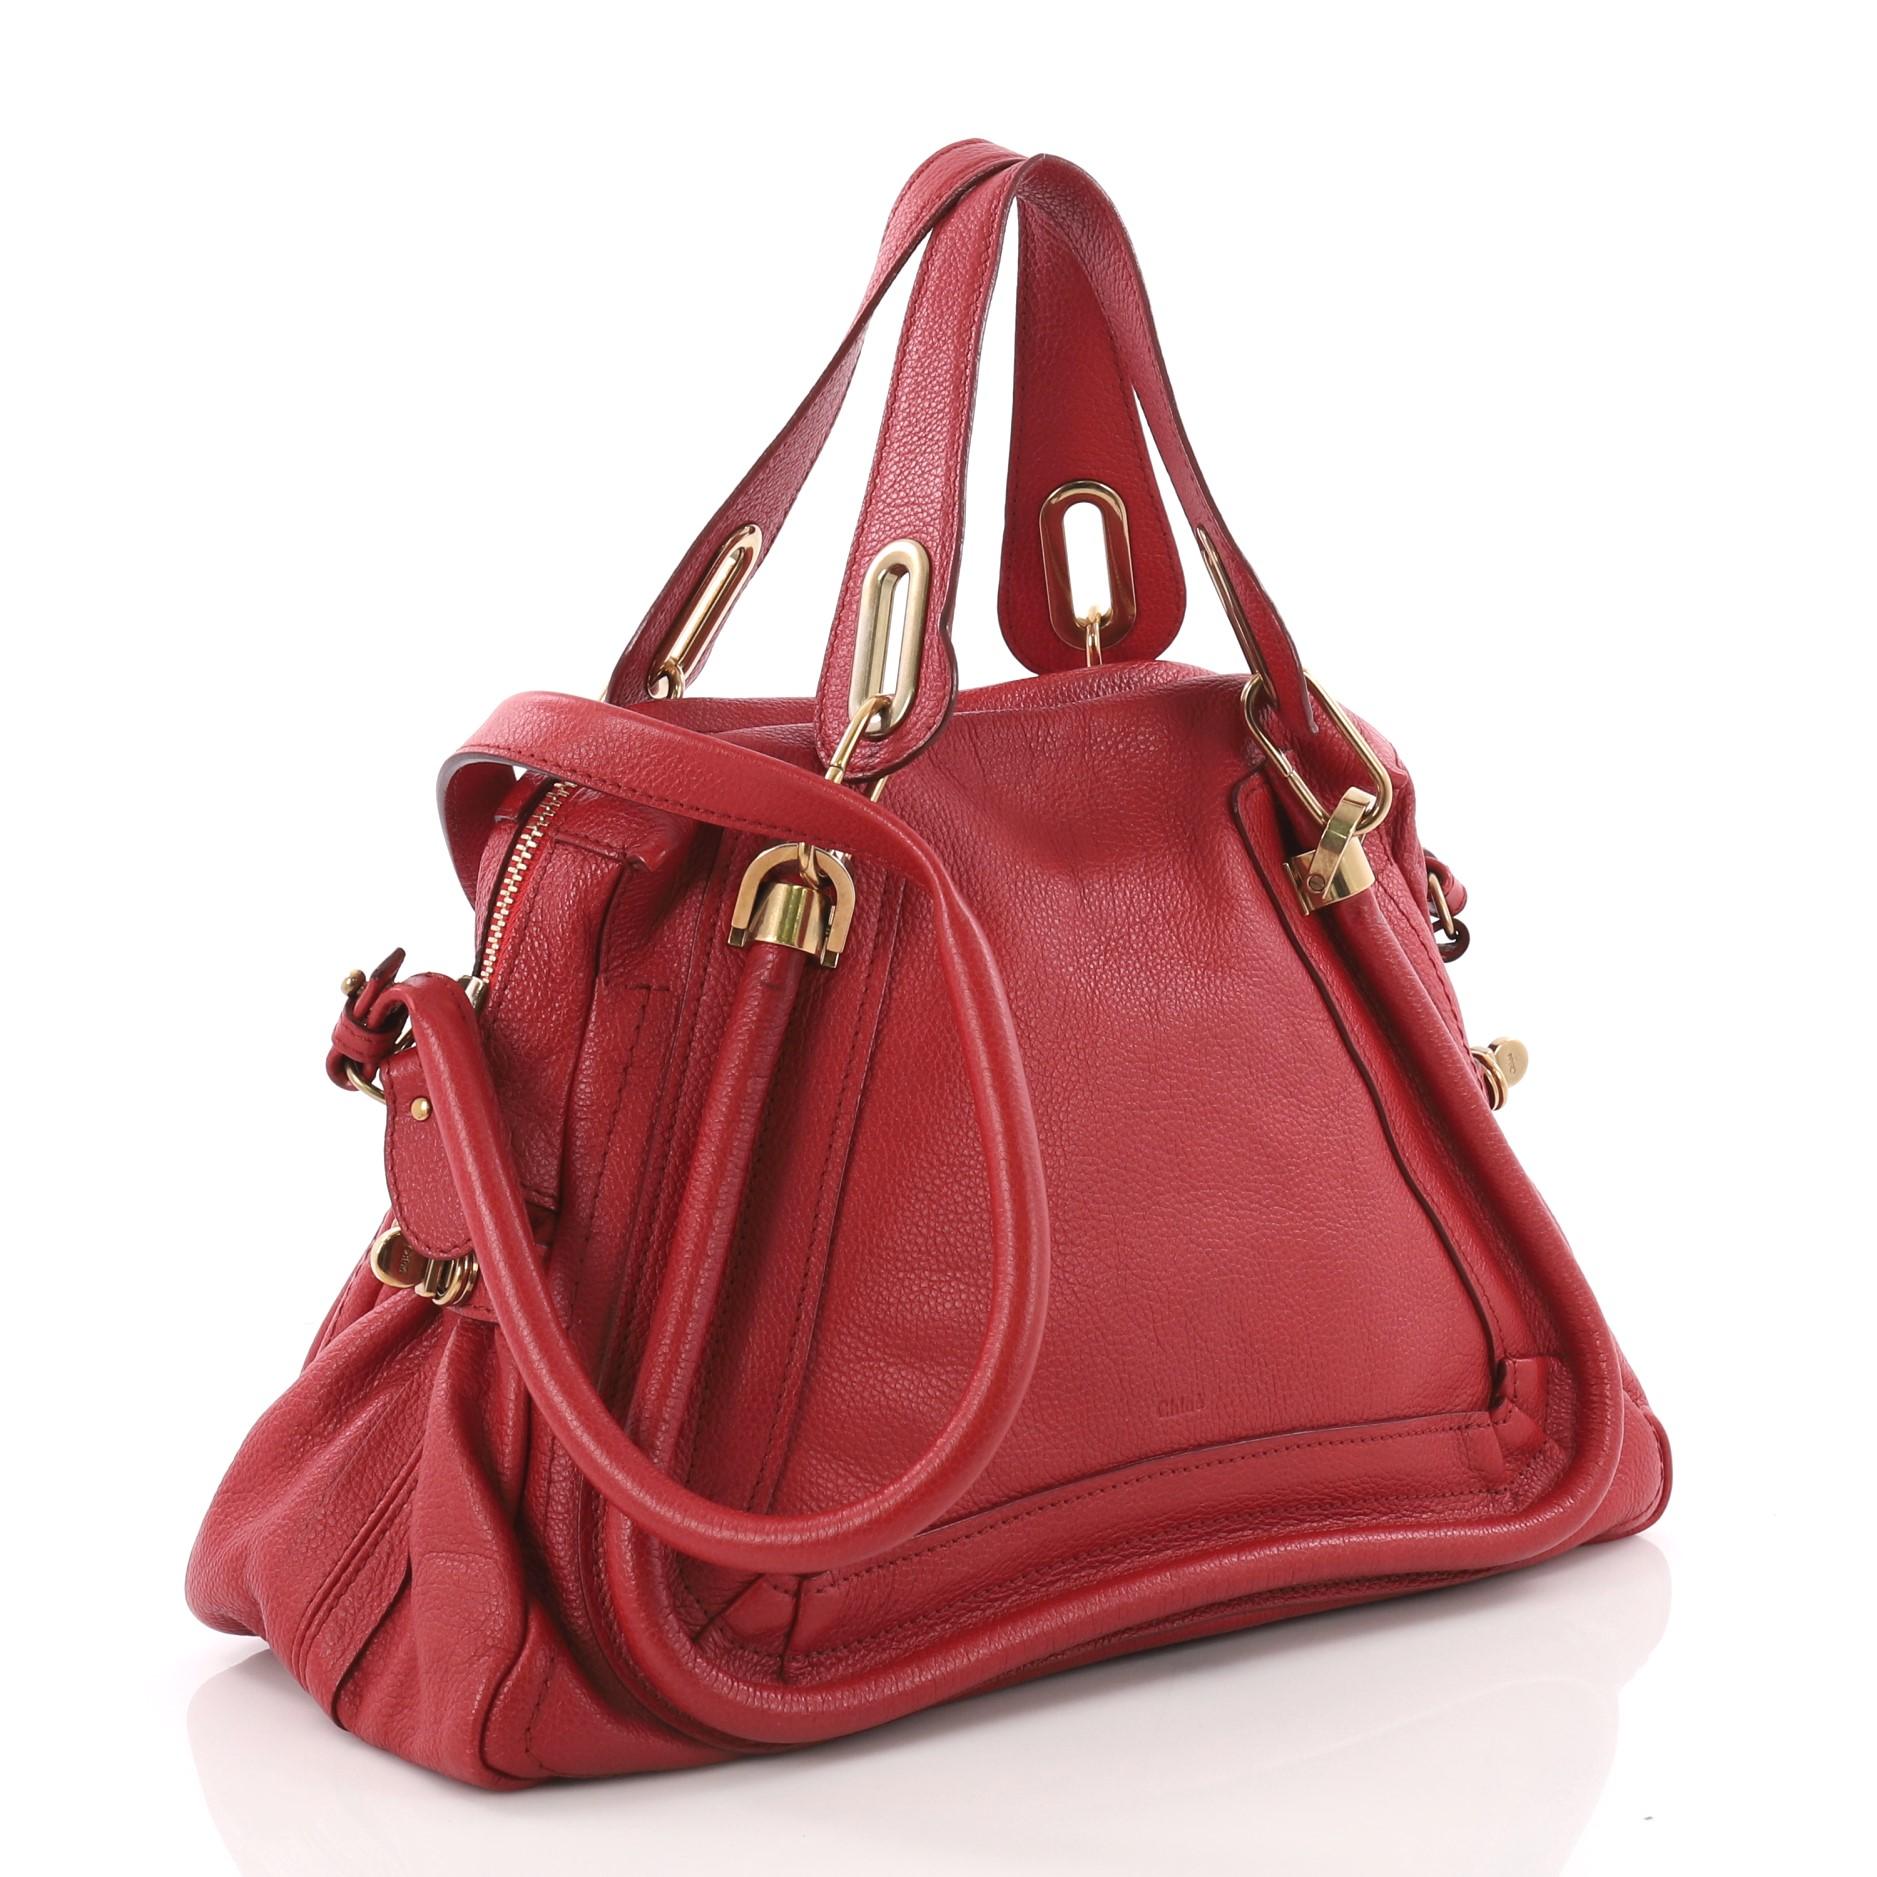 Red Chloe Paraty Top Handle Bag Leather Medium 